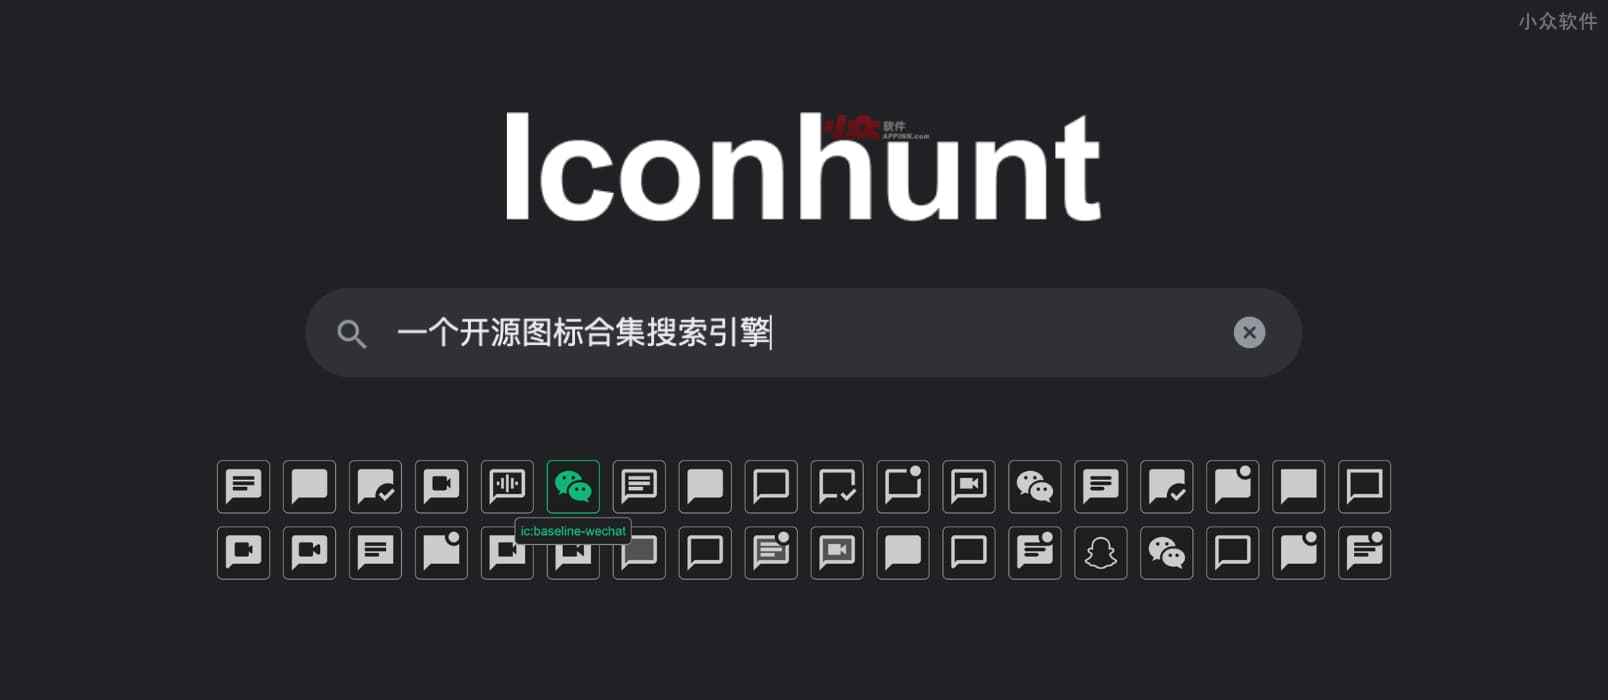 Iconhunt - 15 万张，开源图标合集搜索引擎，可快速复制到 Notion、Figma 等环境